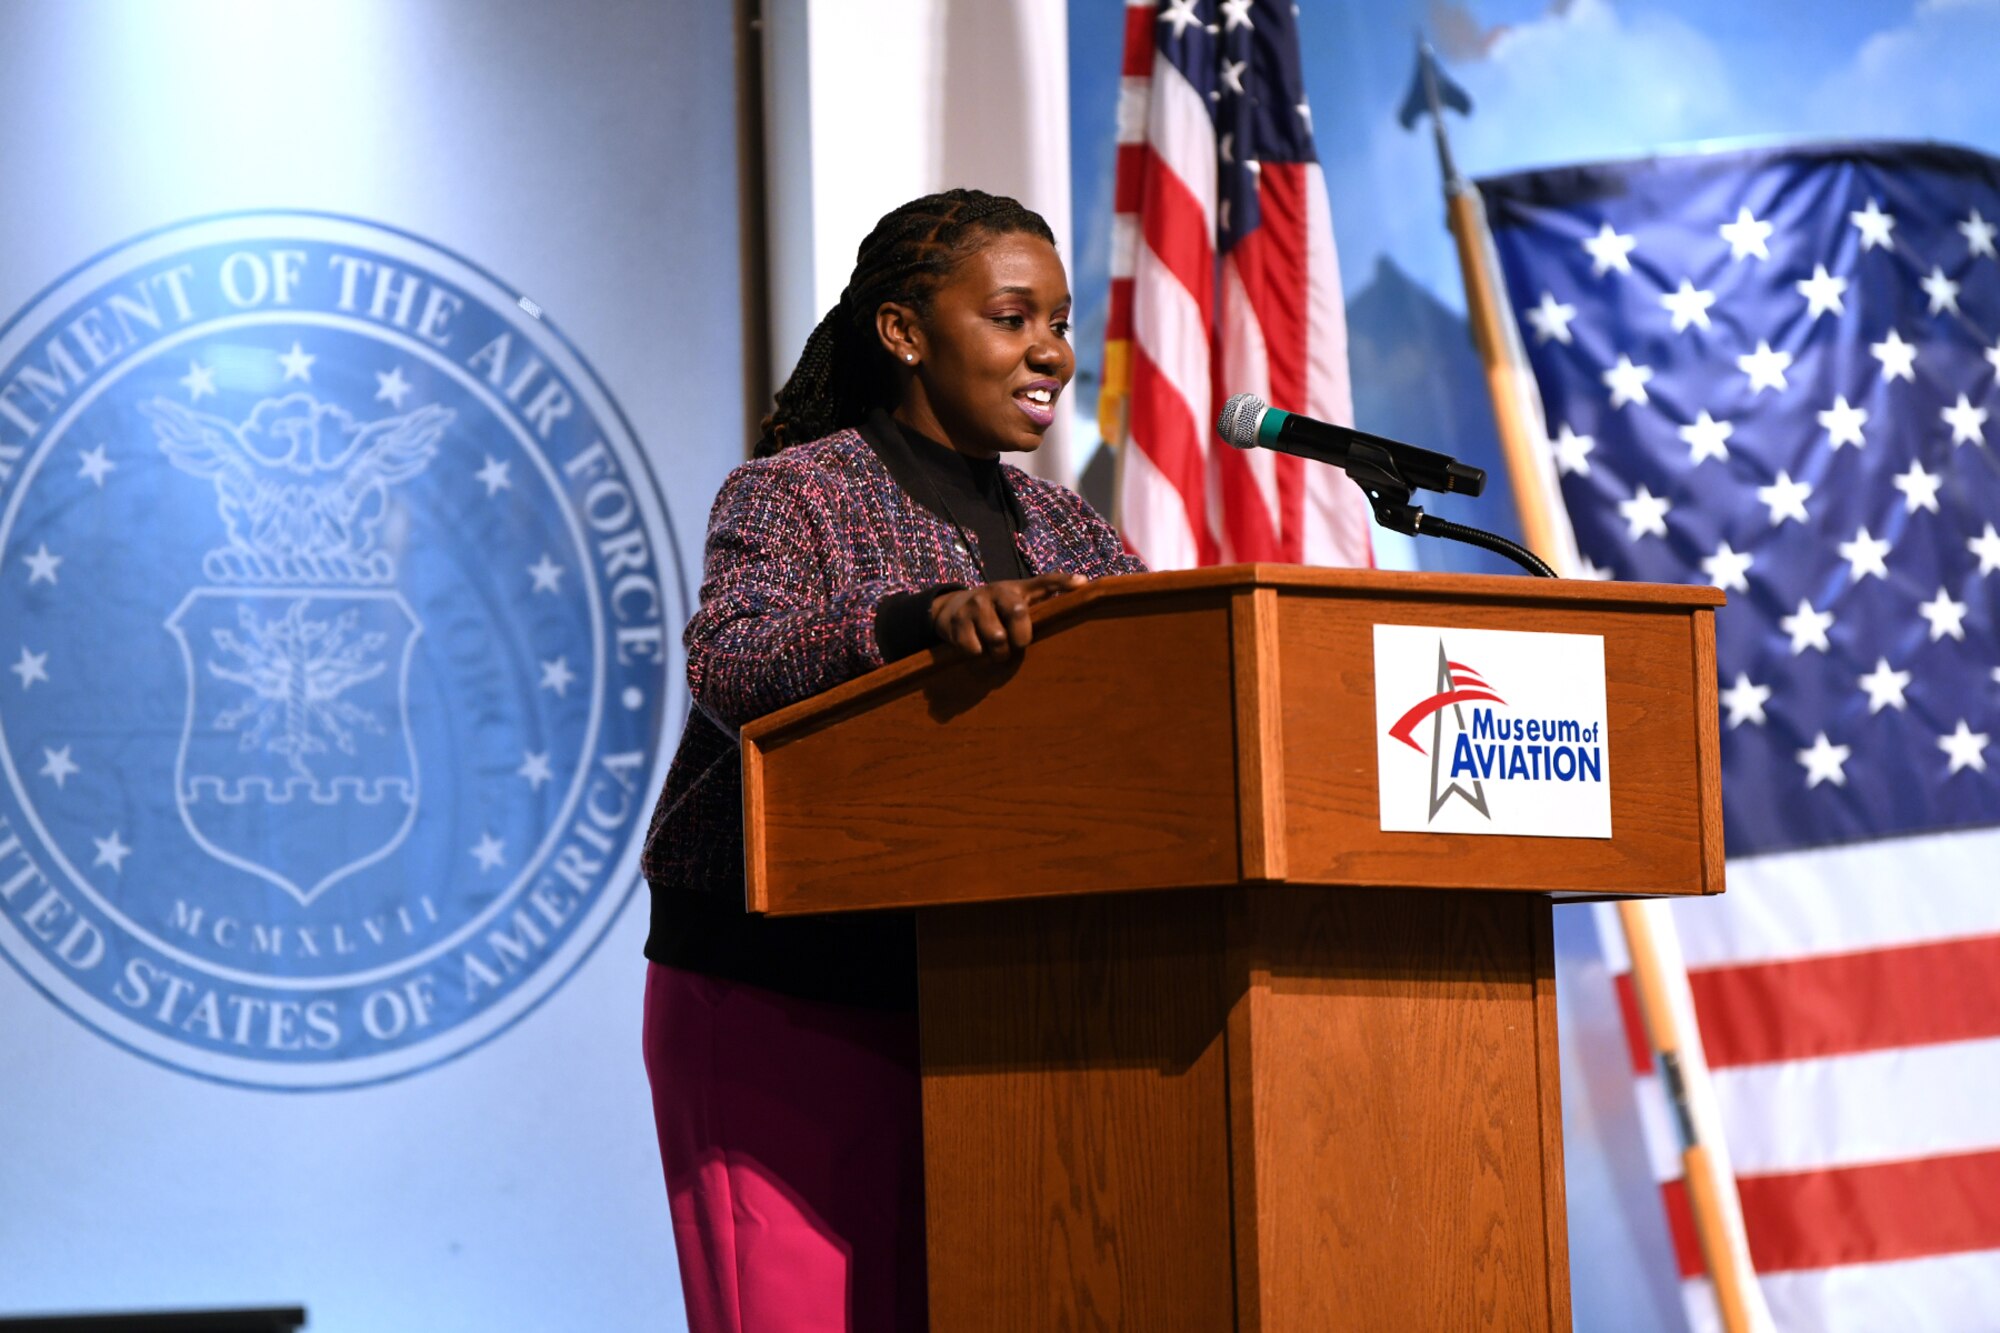 Woman standing behind podium, speaking